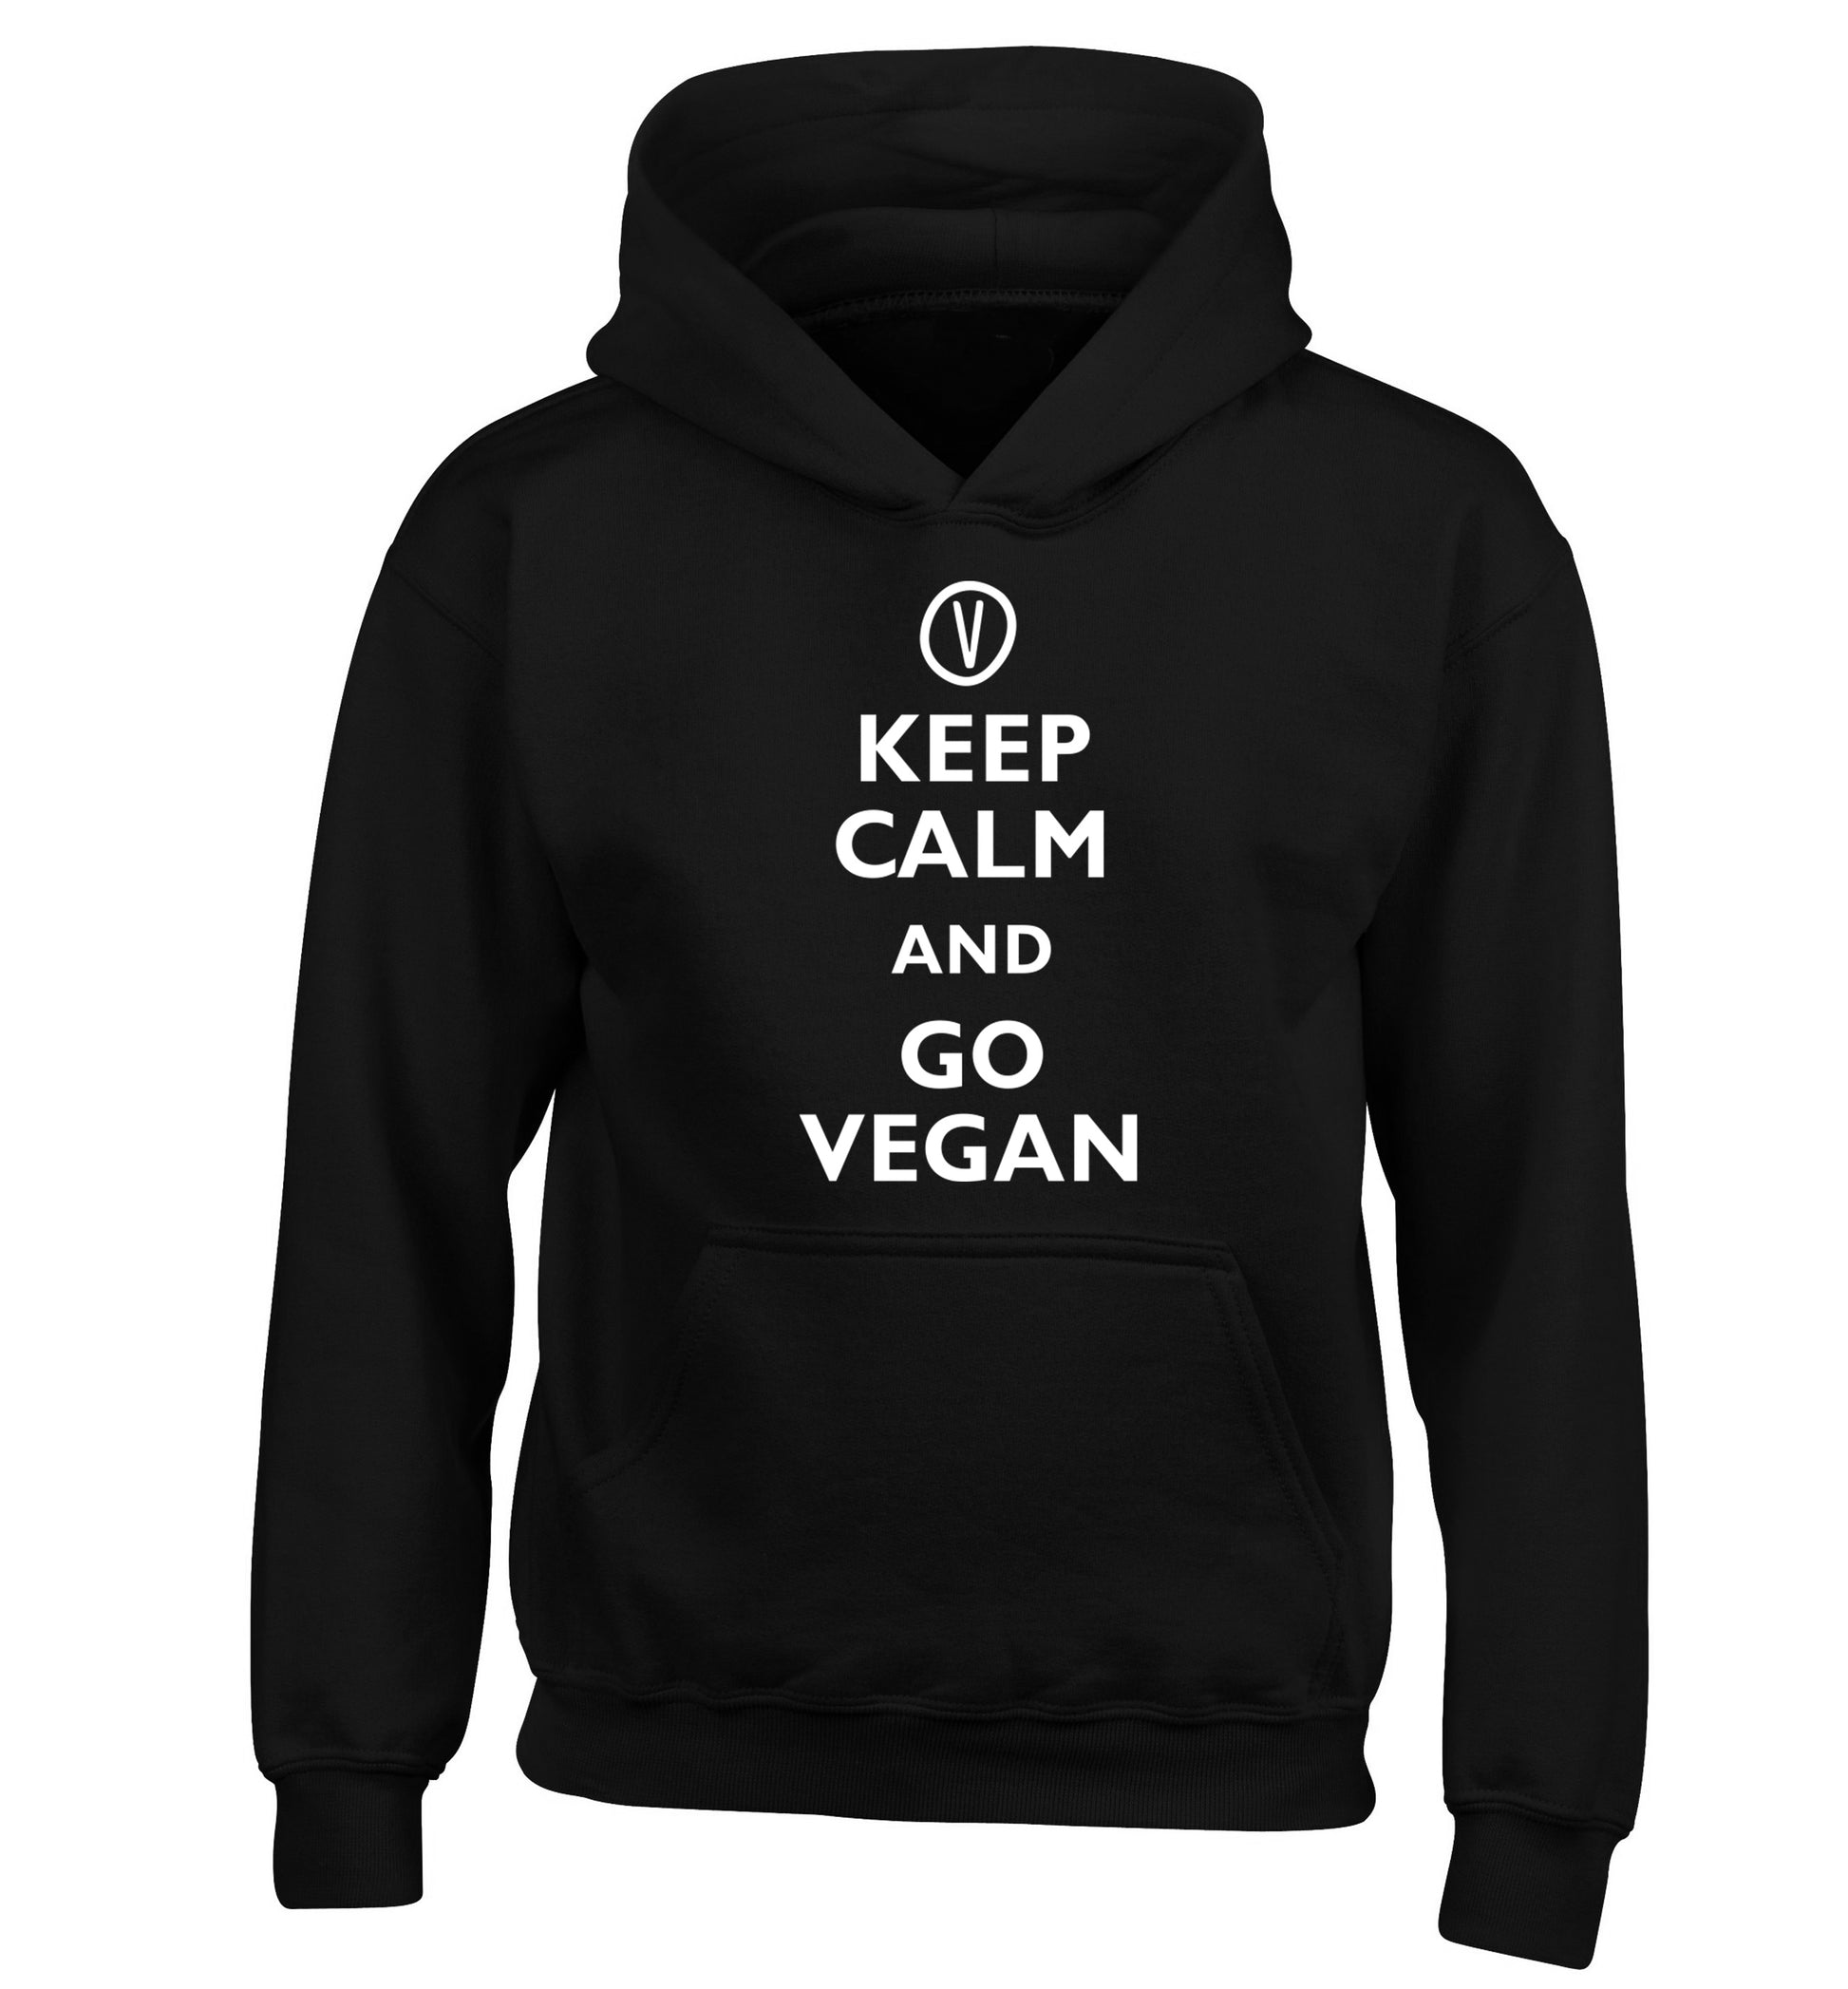 Keep calm and go vegan children's black hoodie 12-13 Years